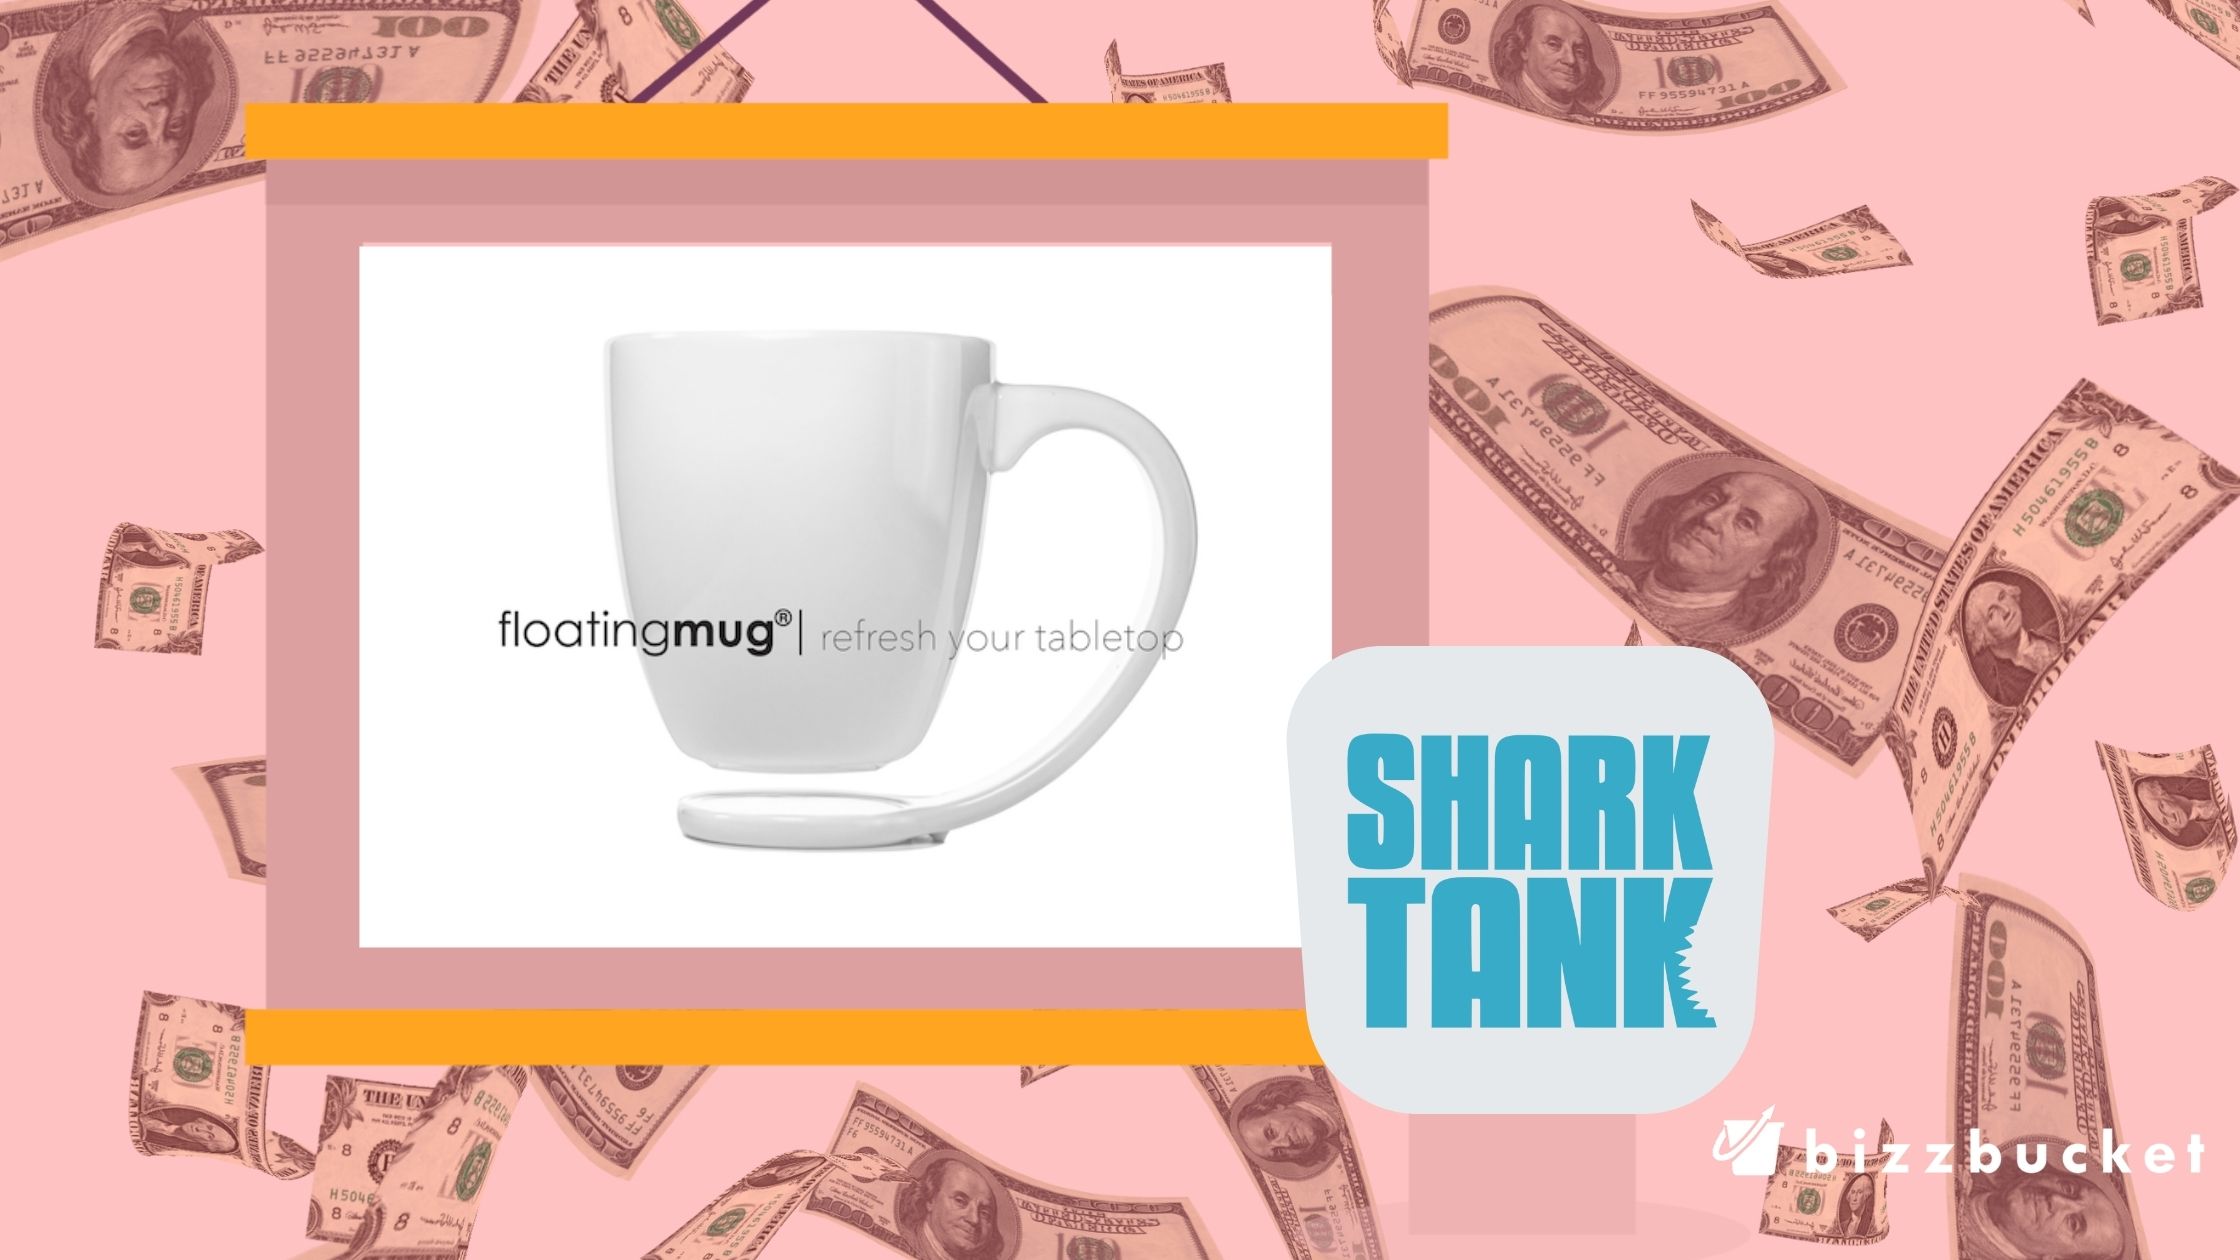 Floating Mug shark tank update